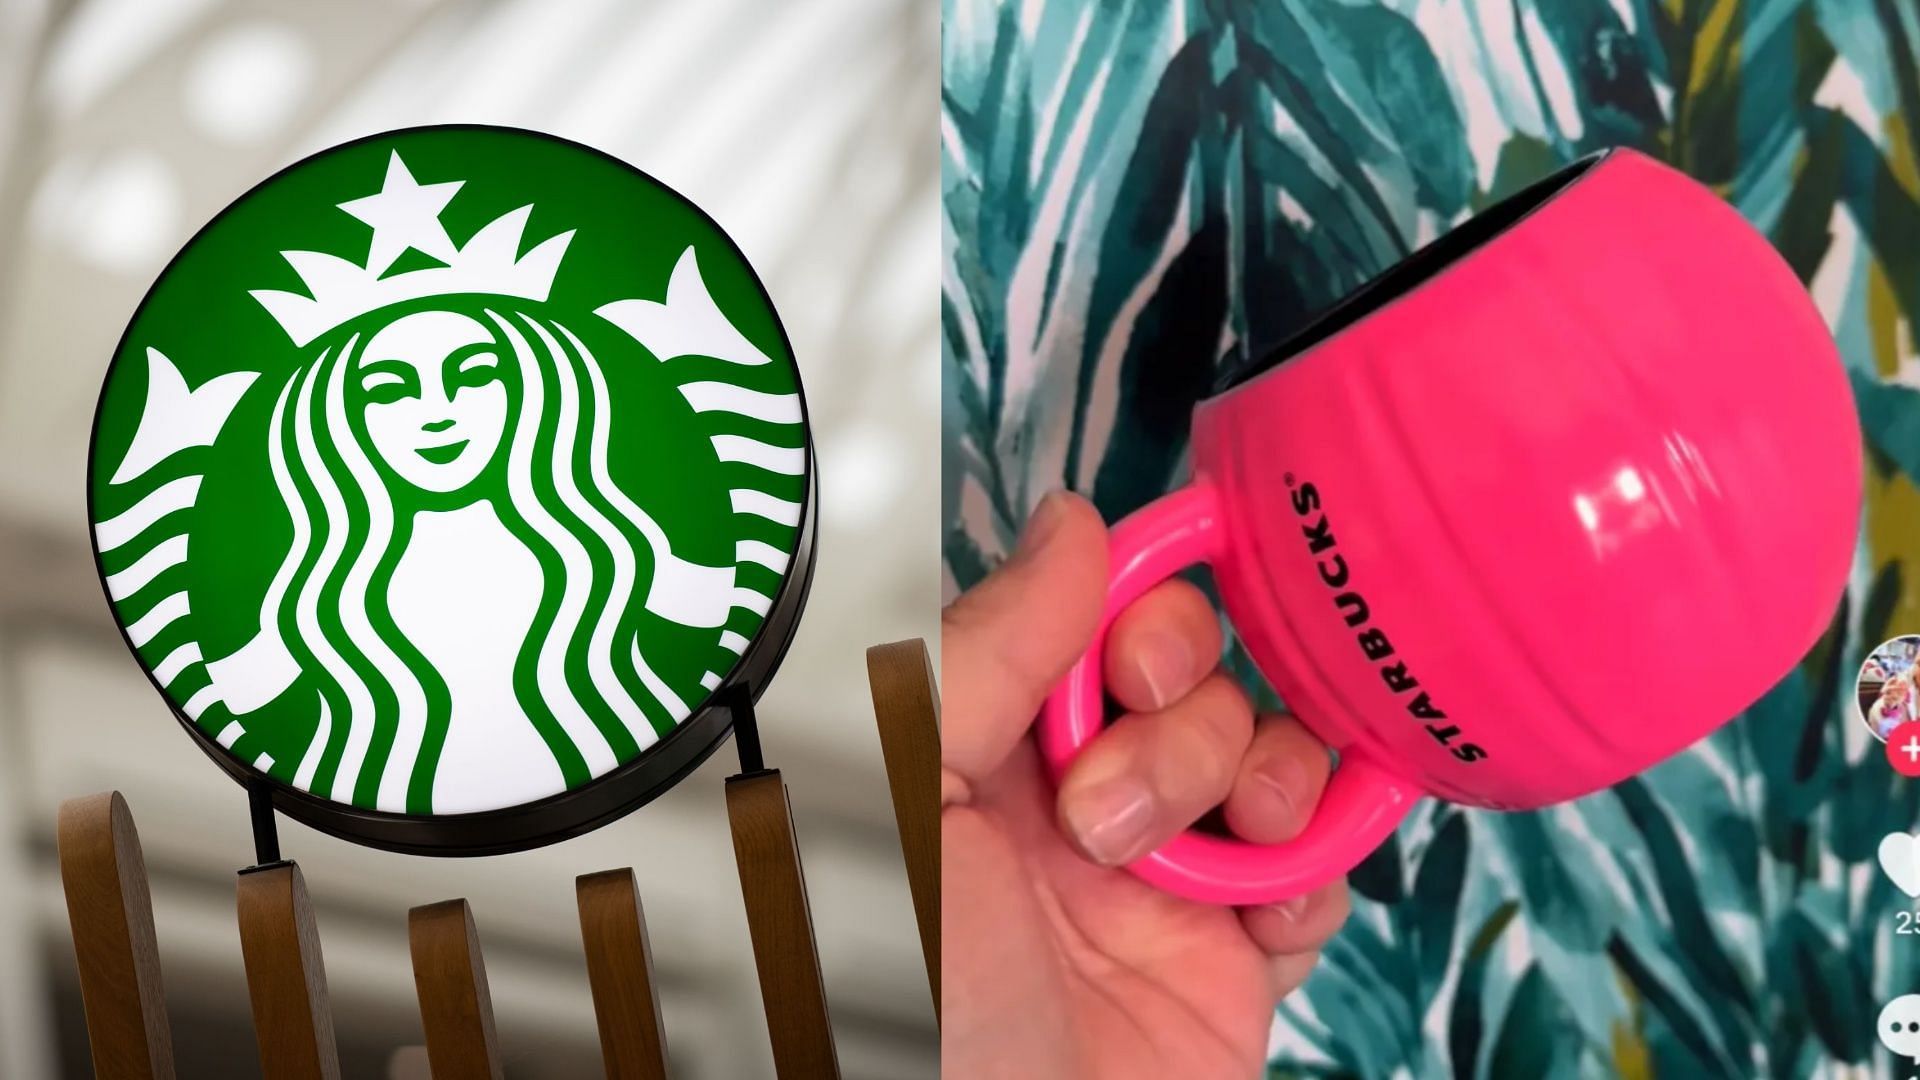 Starbucks Pink Pumpkin Mug: Where to buy, price, and all you need to know